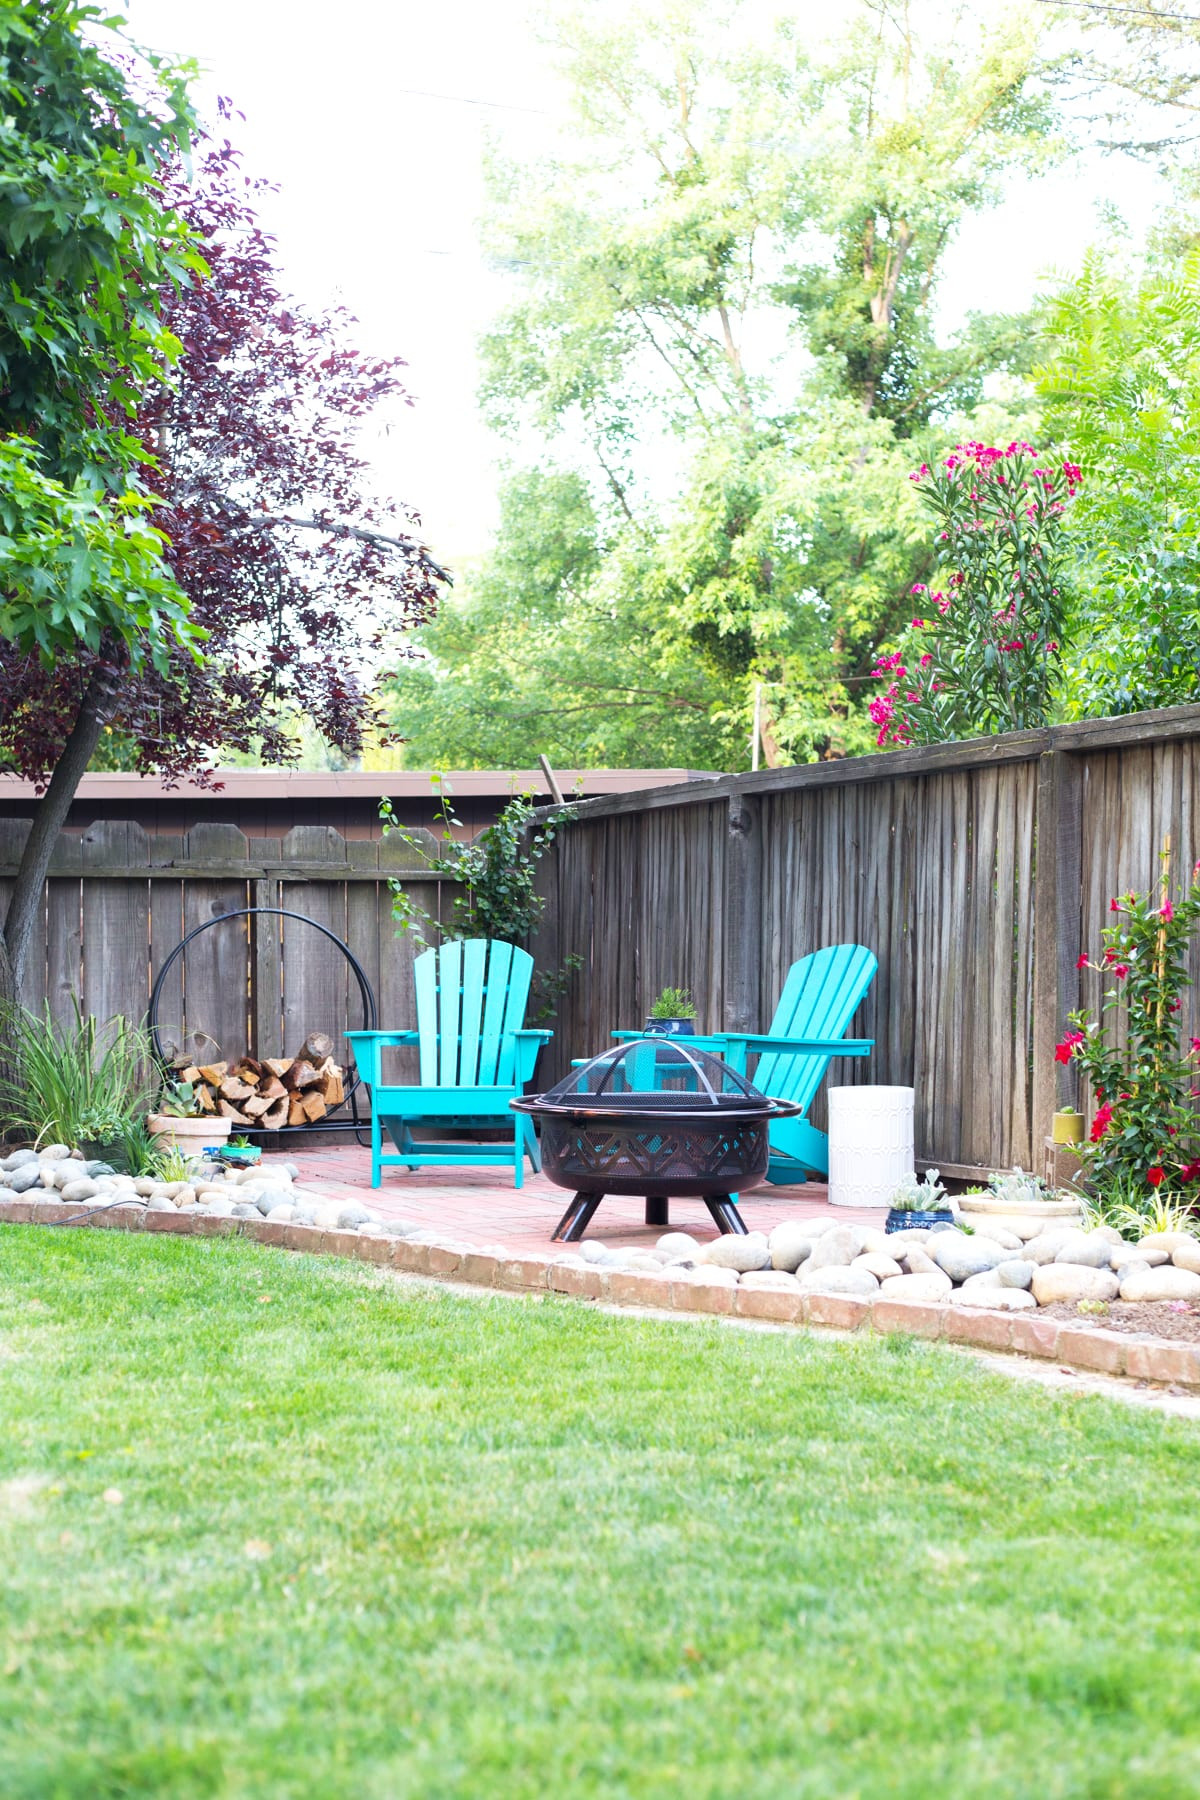 Best ideas about DIY Backyard Ideas
. Save or Pin DIY Backyard Patio Now.